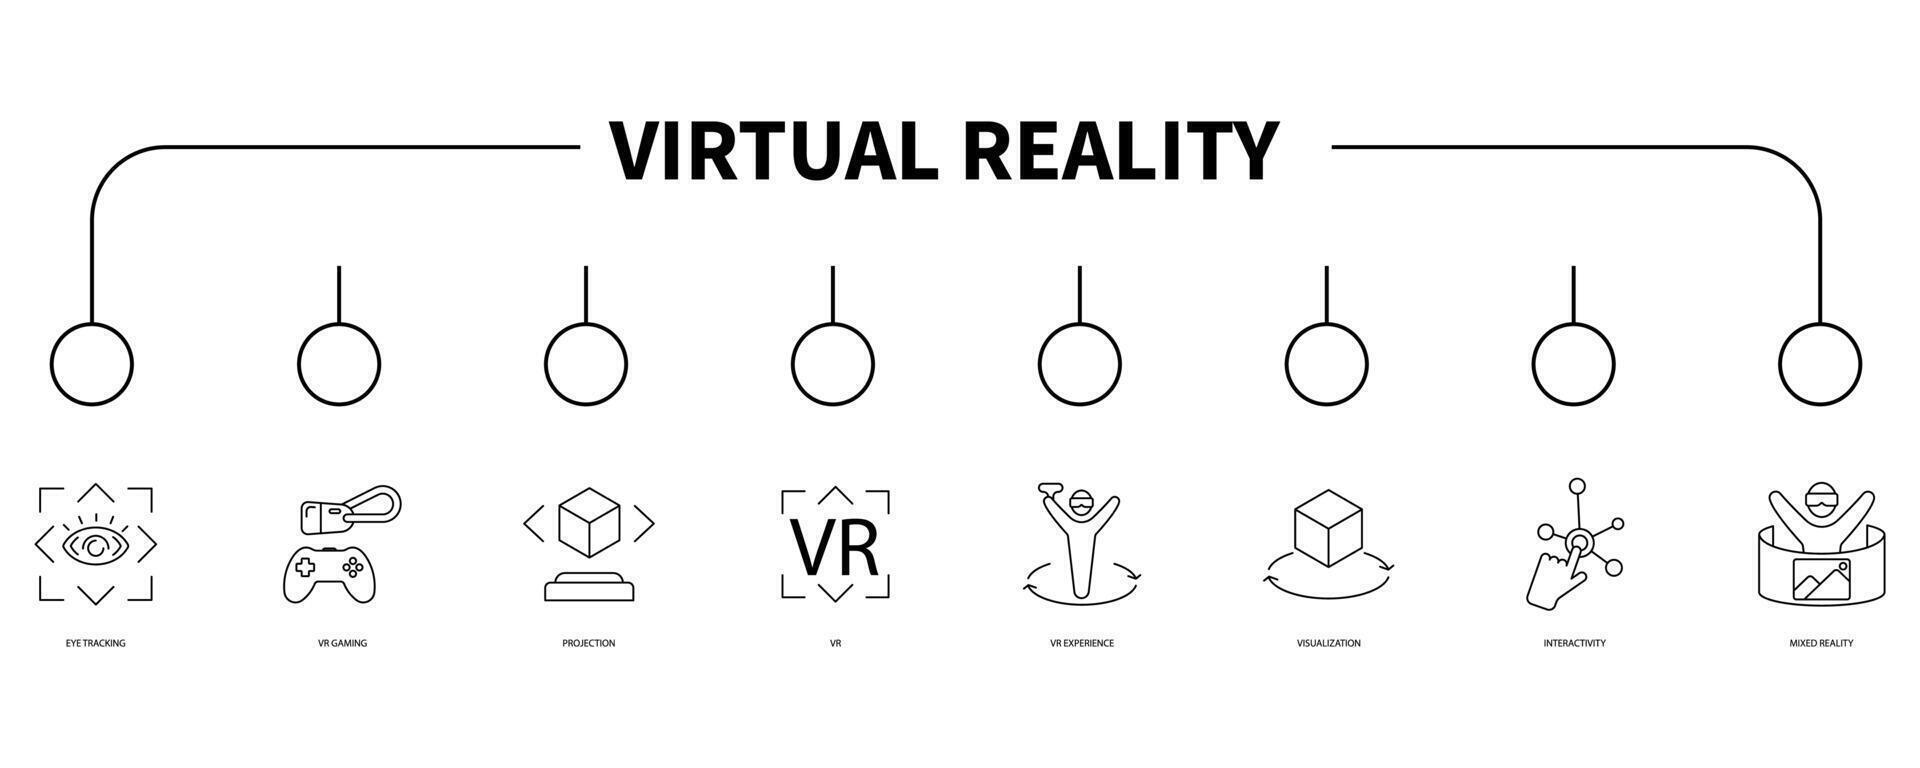 Virtual reality banner web icon vector illustration concept